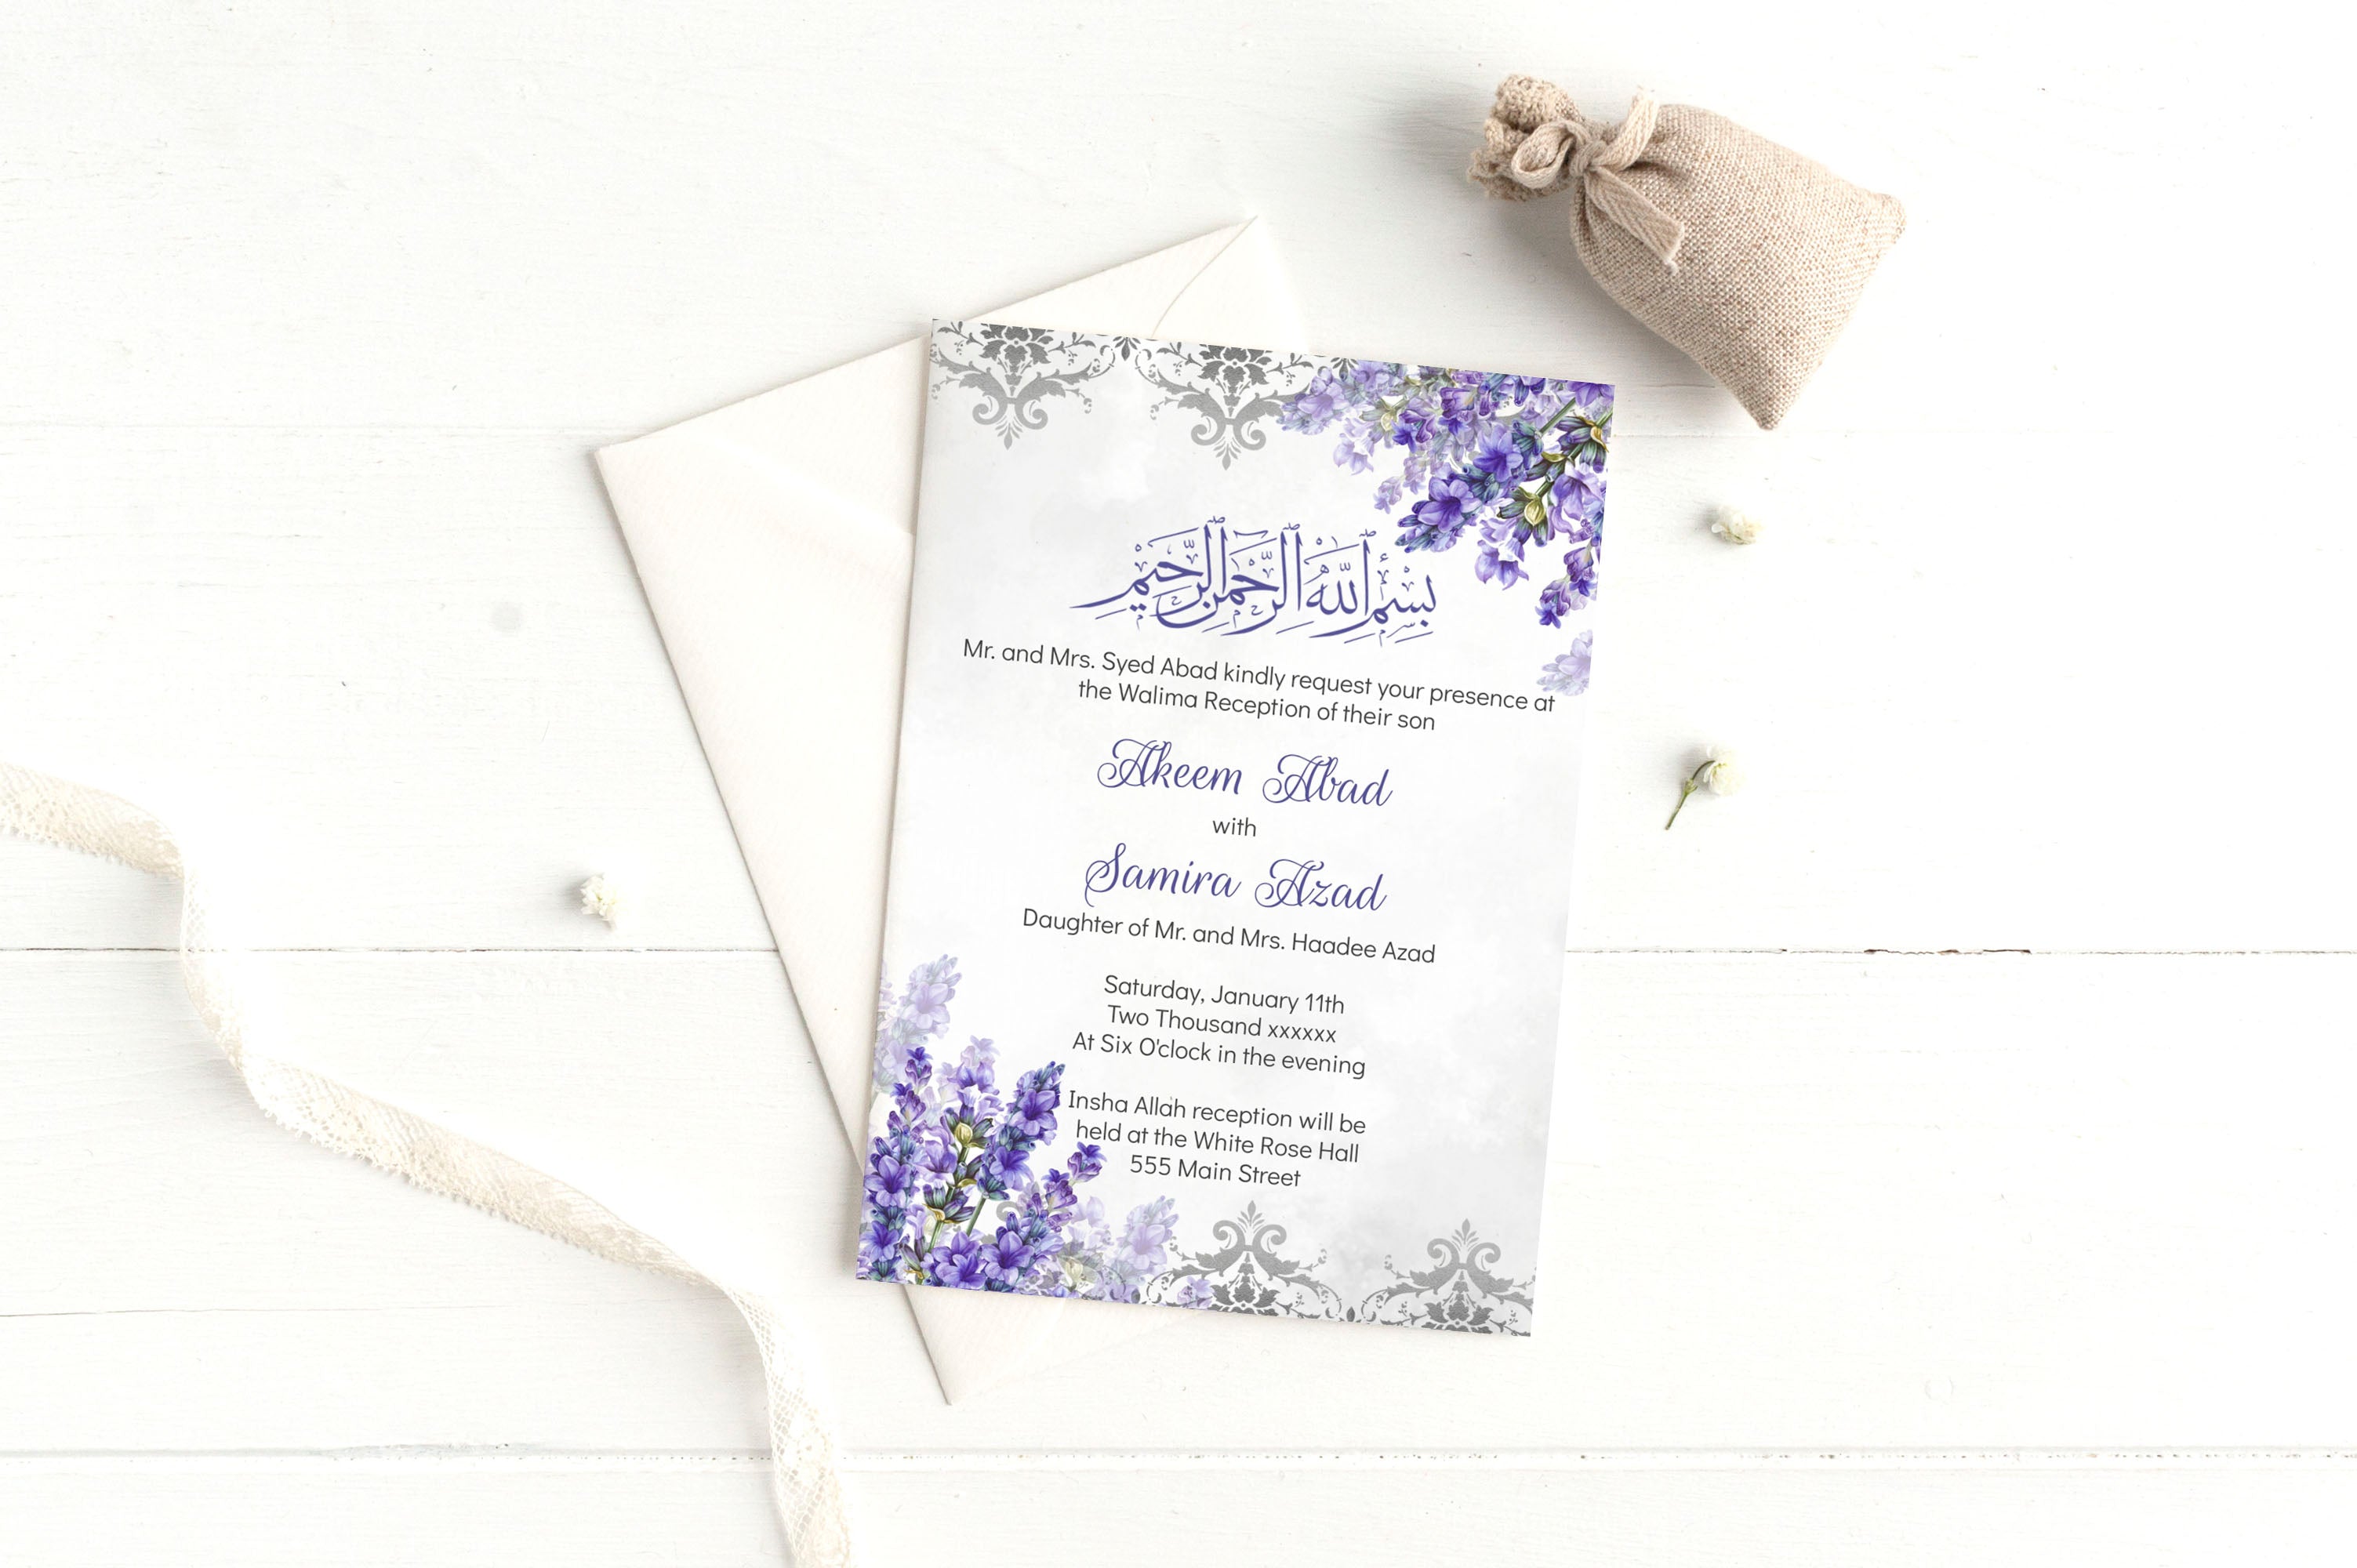 Lavender silver walima nikah wedding invitations